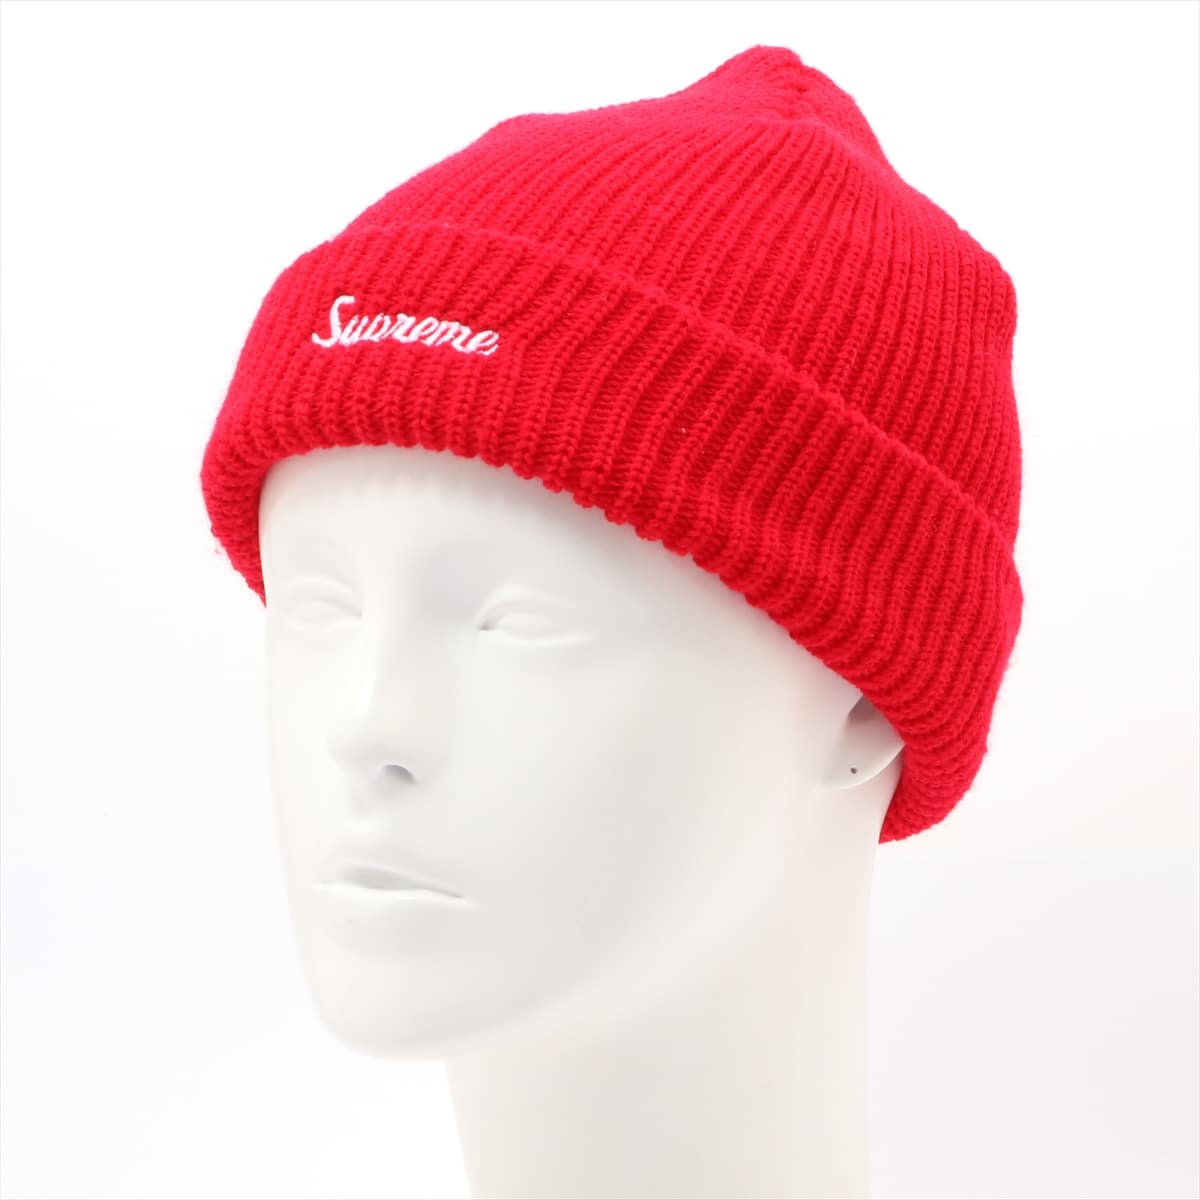 Supreme knit hat acrylic red | eBay